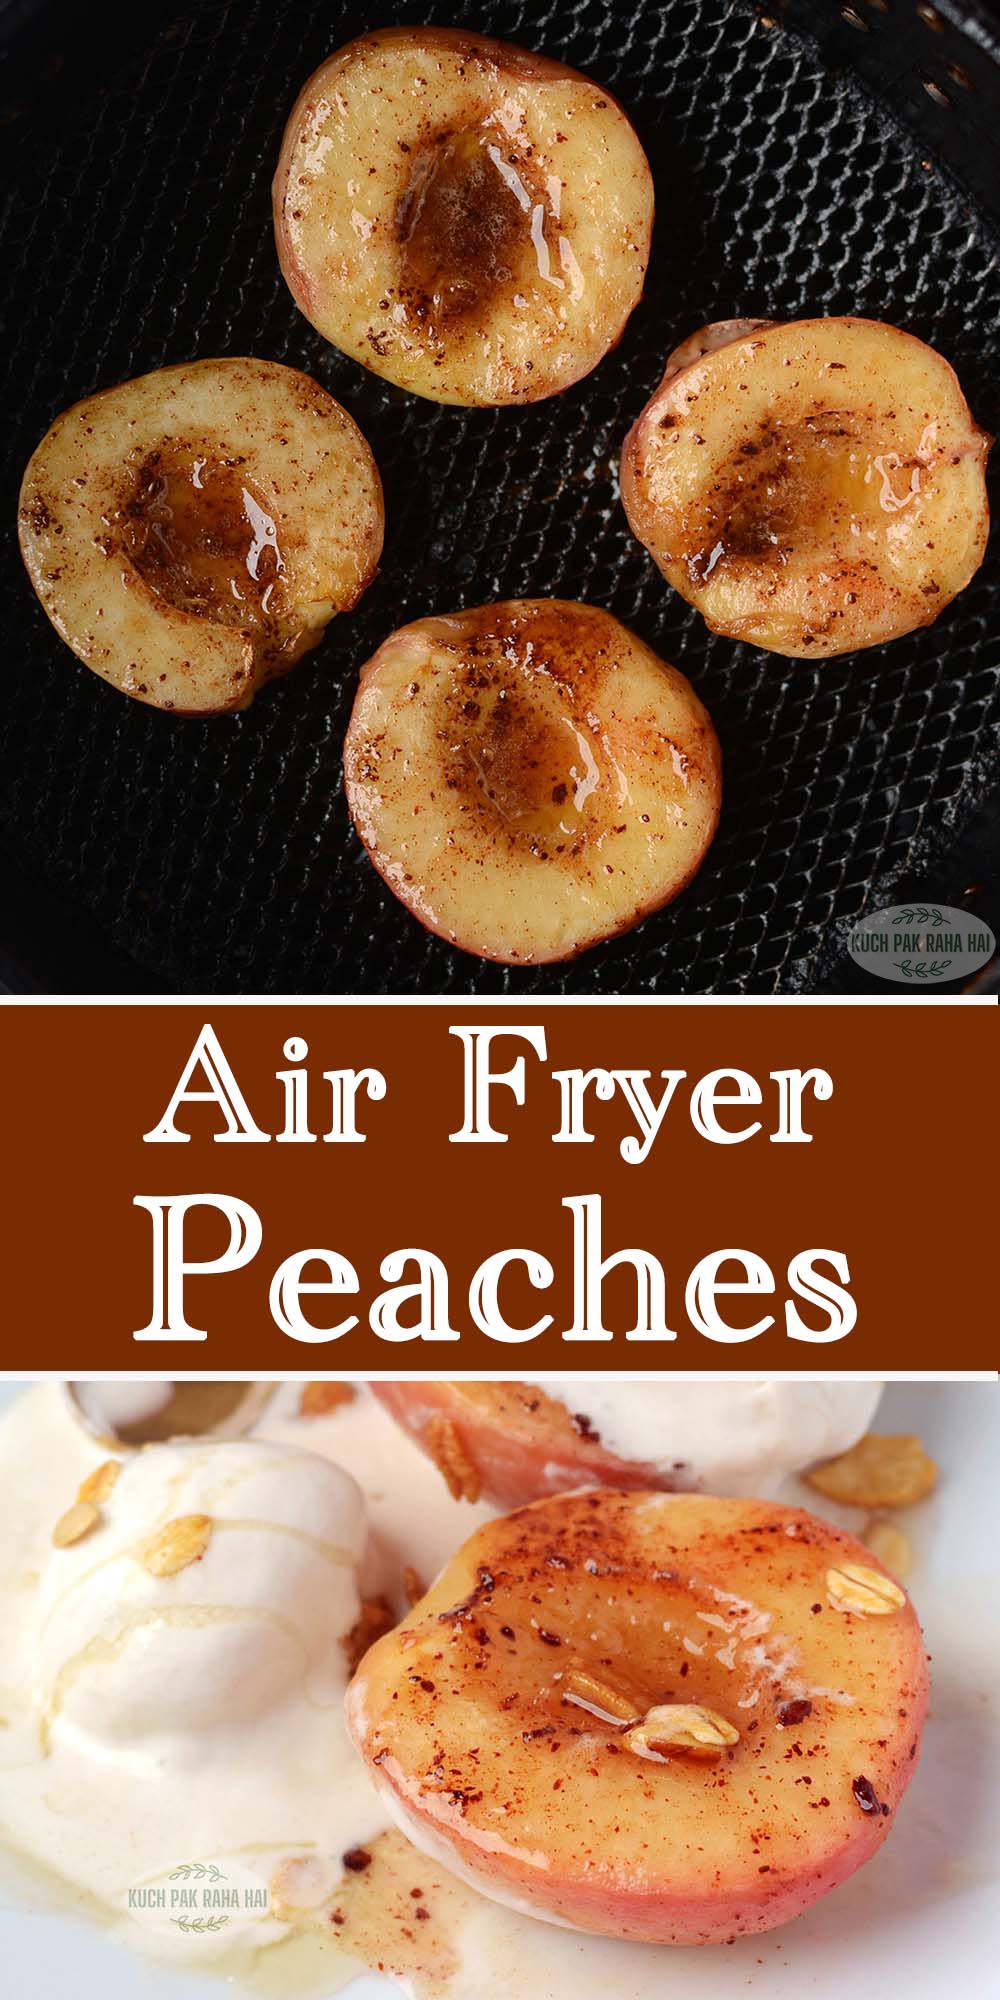 Air fryer peaches with honey ice cream.